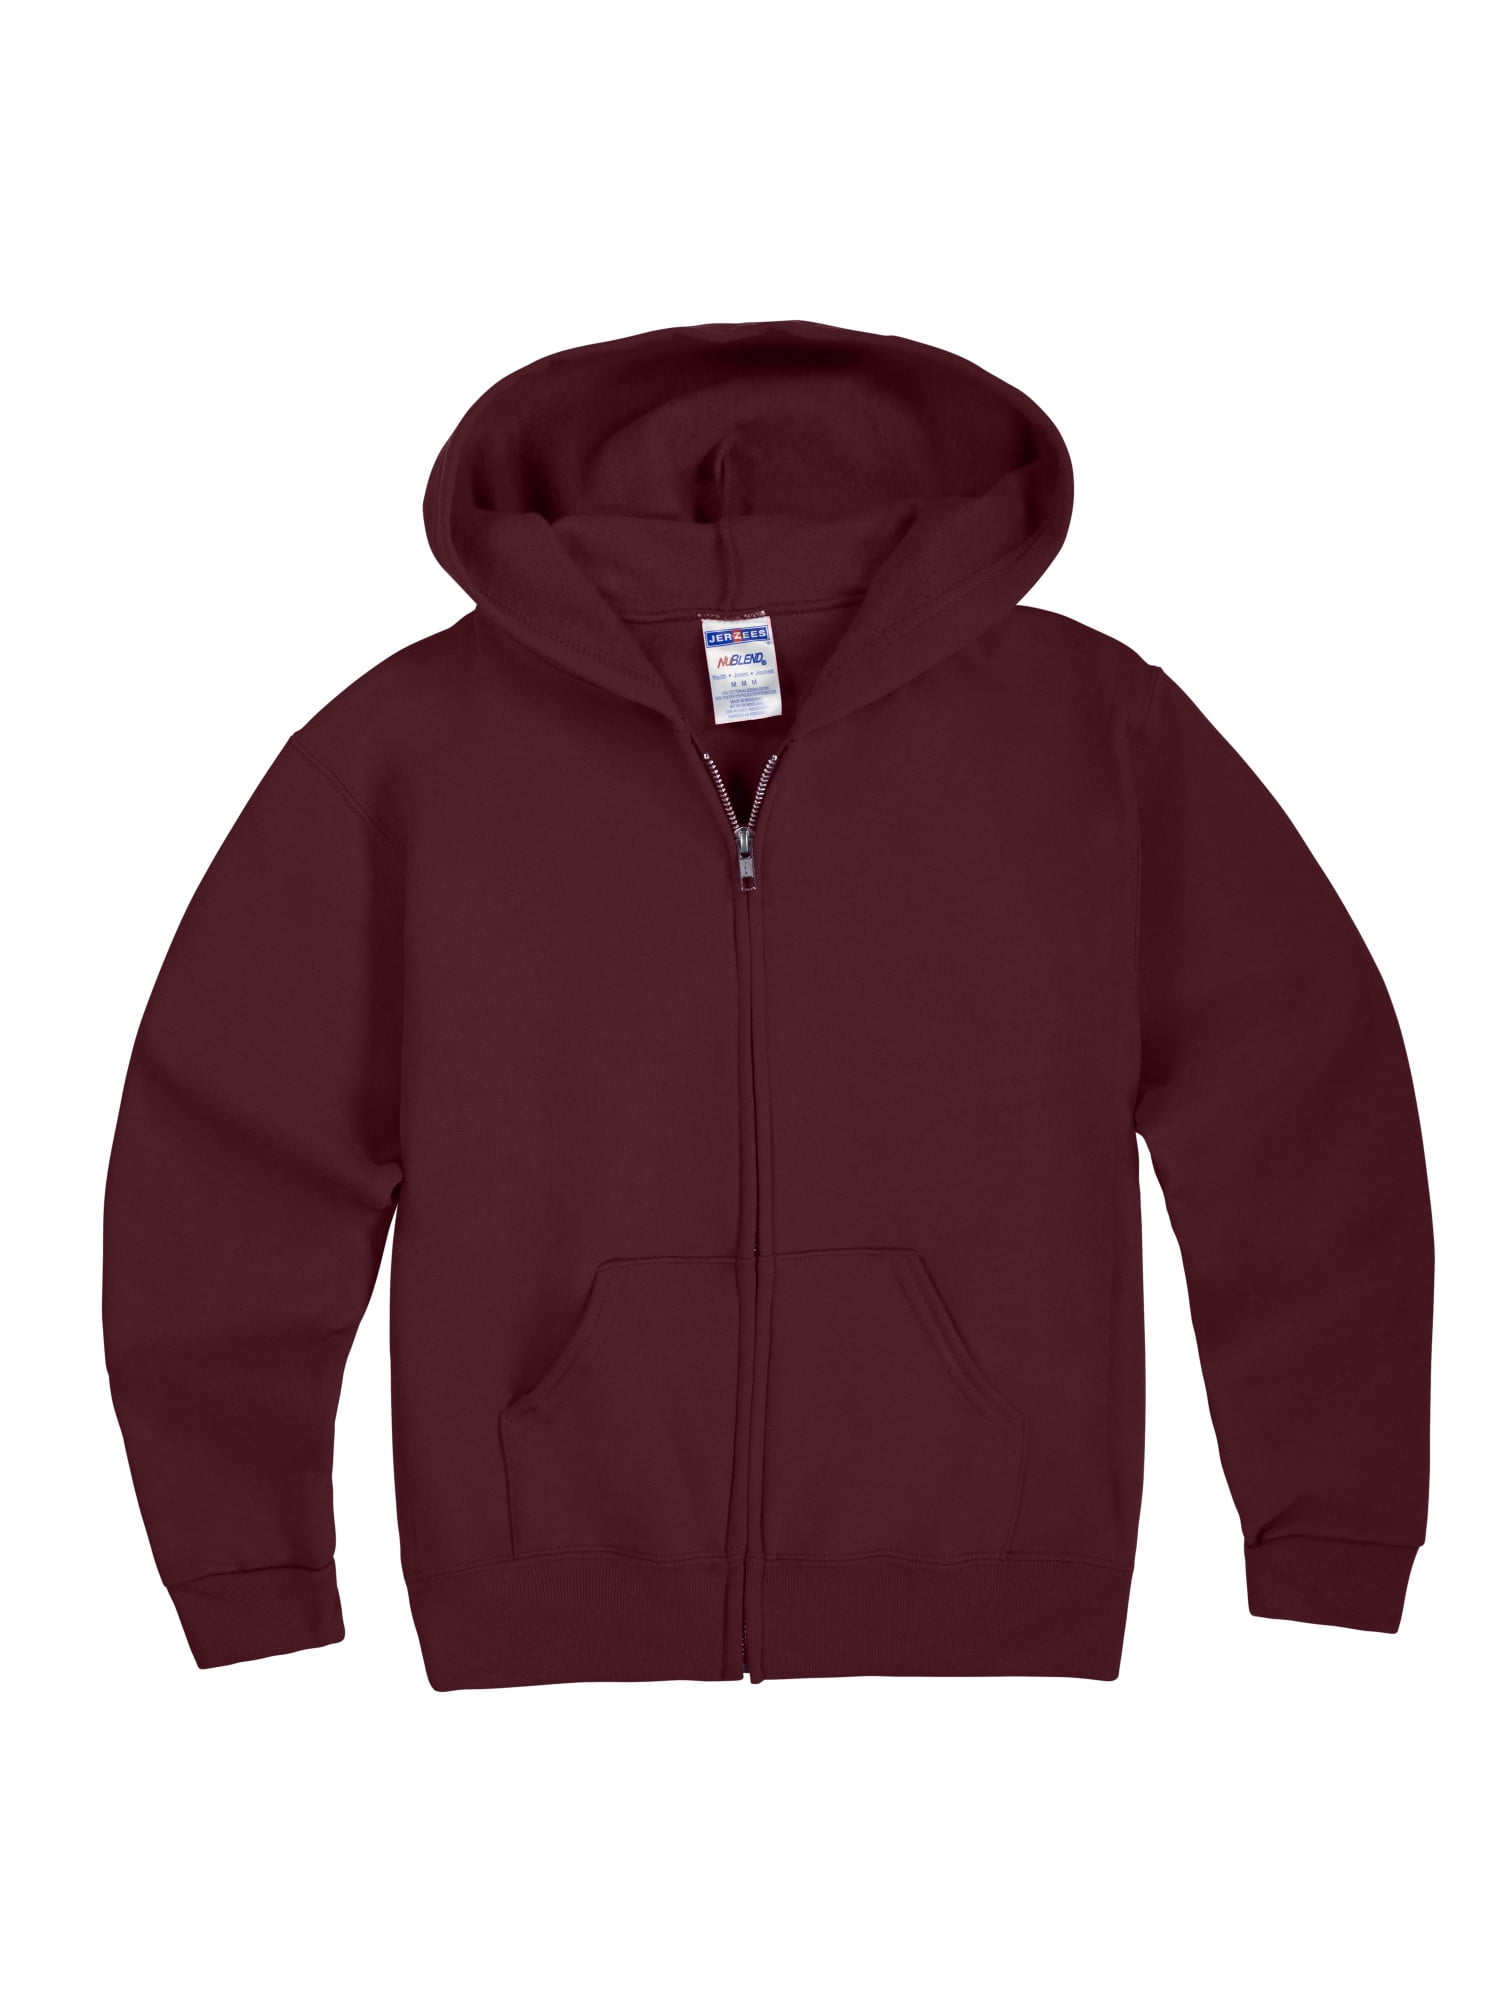 Youth Full-Zip Hooded Sweatshirts in 22 Colors Joe's USA